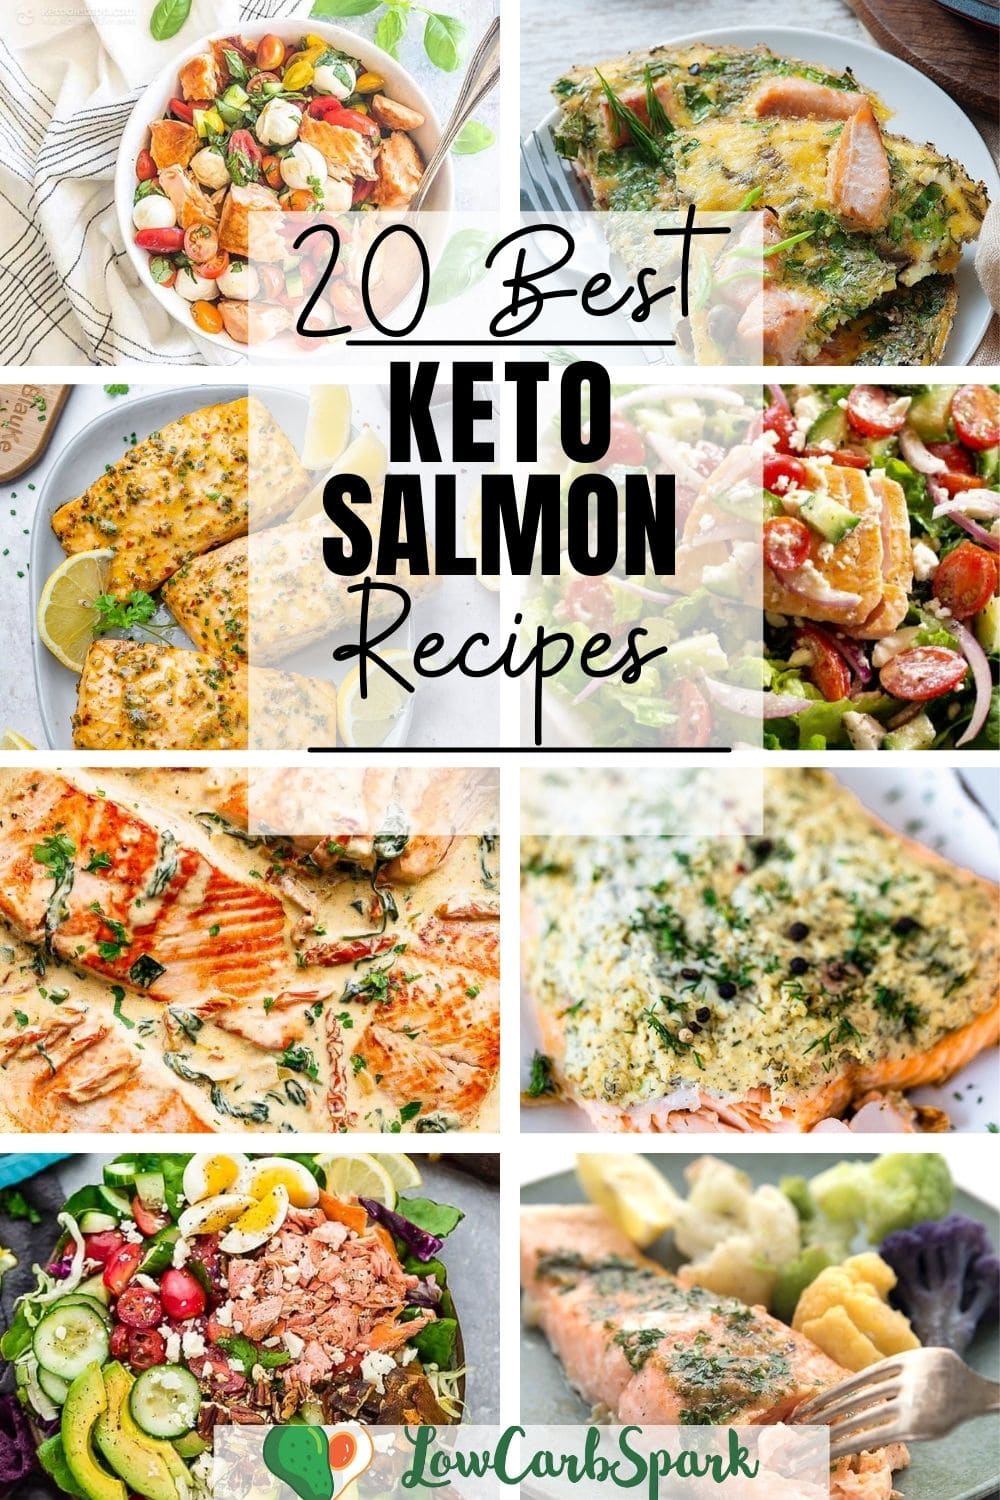 The Best 20 Keto Salmon Recipes